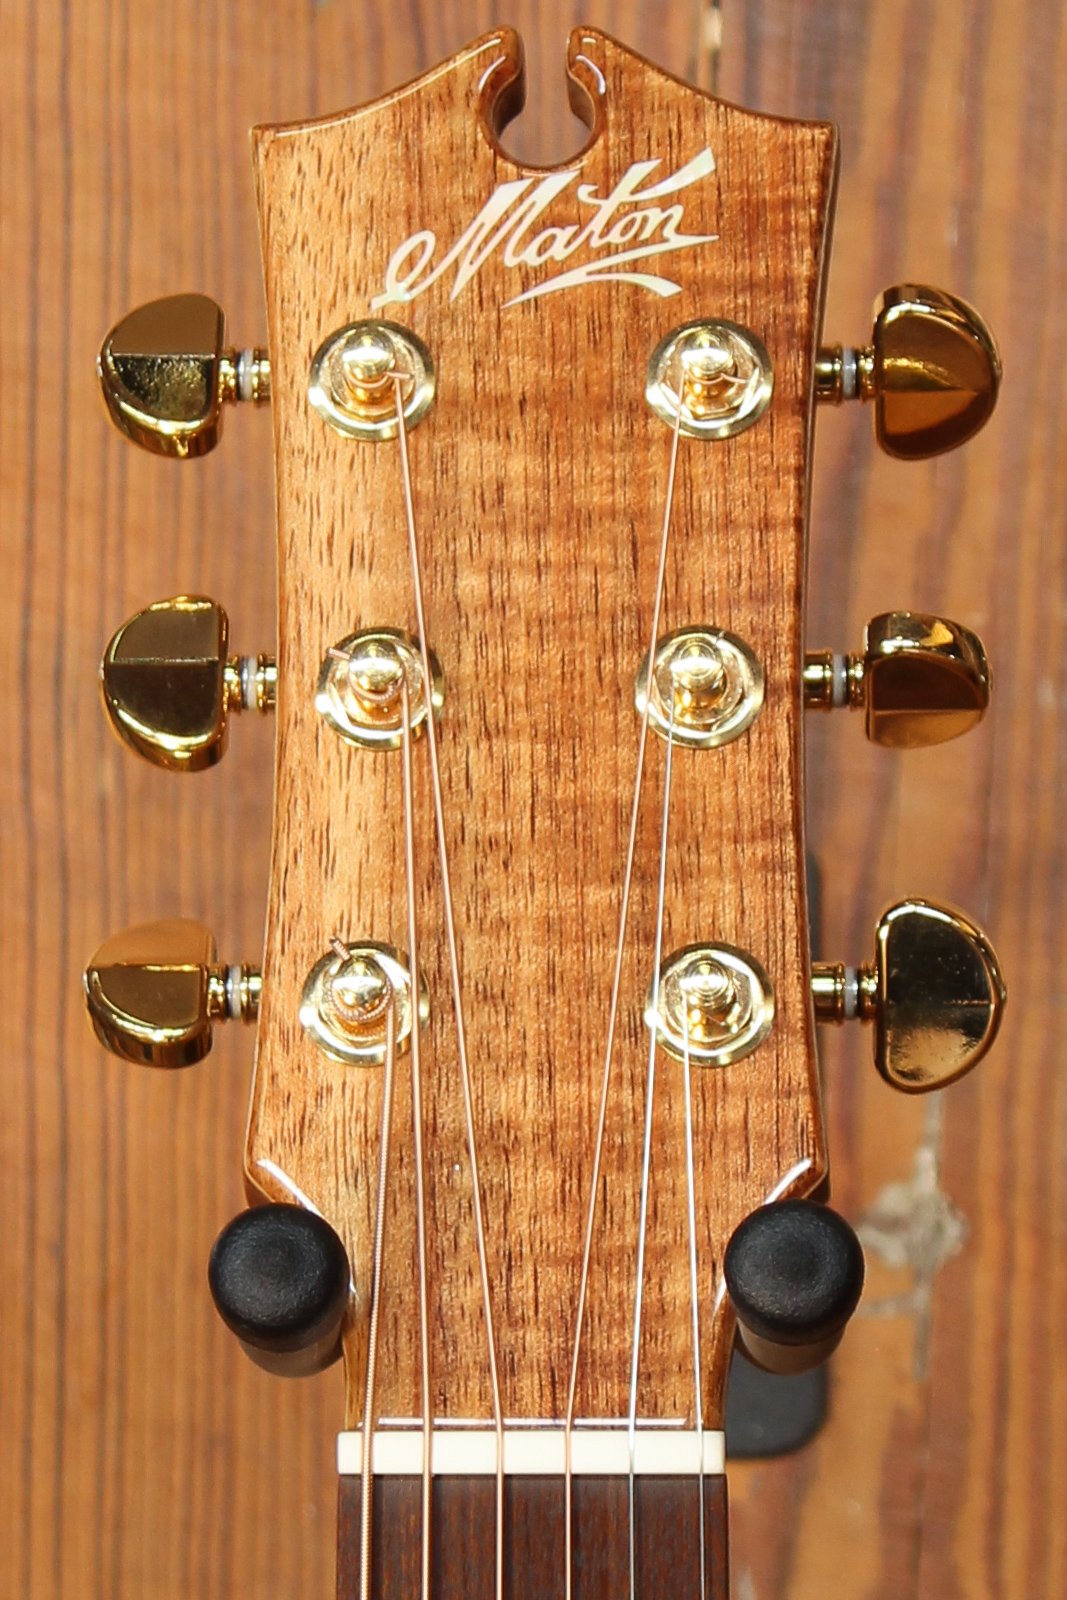 Maton Guitars EA 808 Australian - 14179 - Artisan Guitars